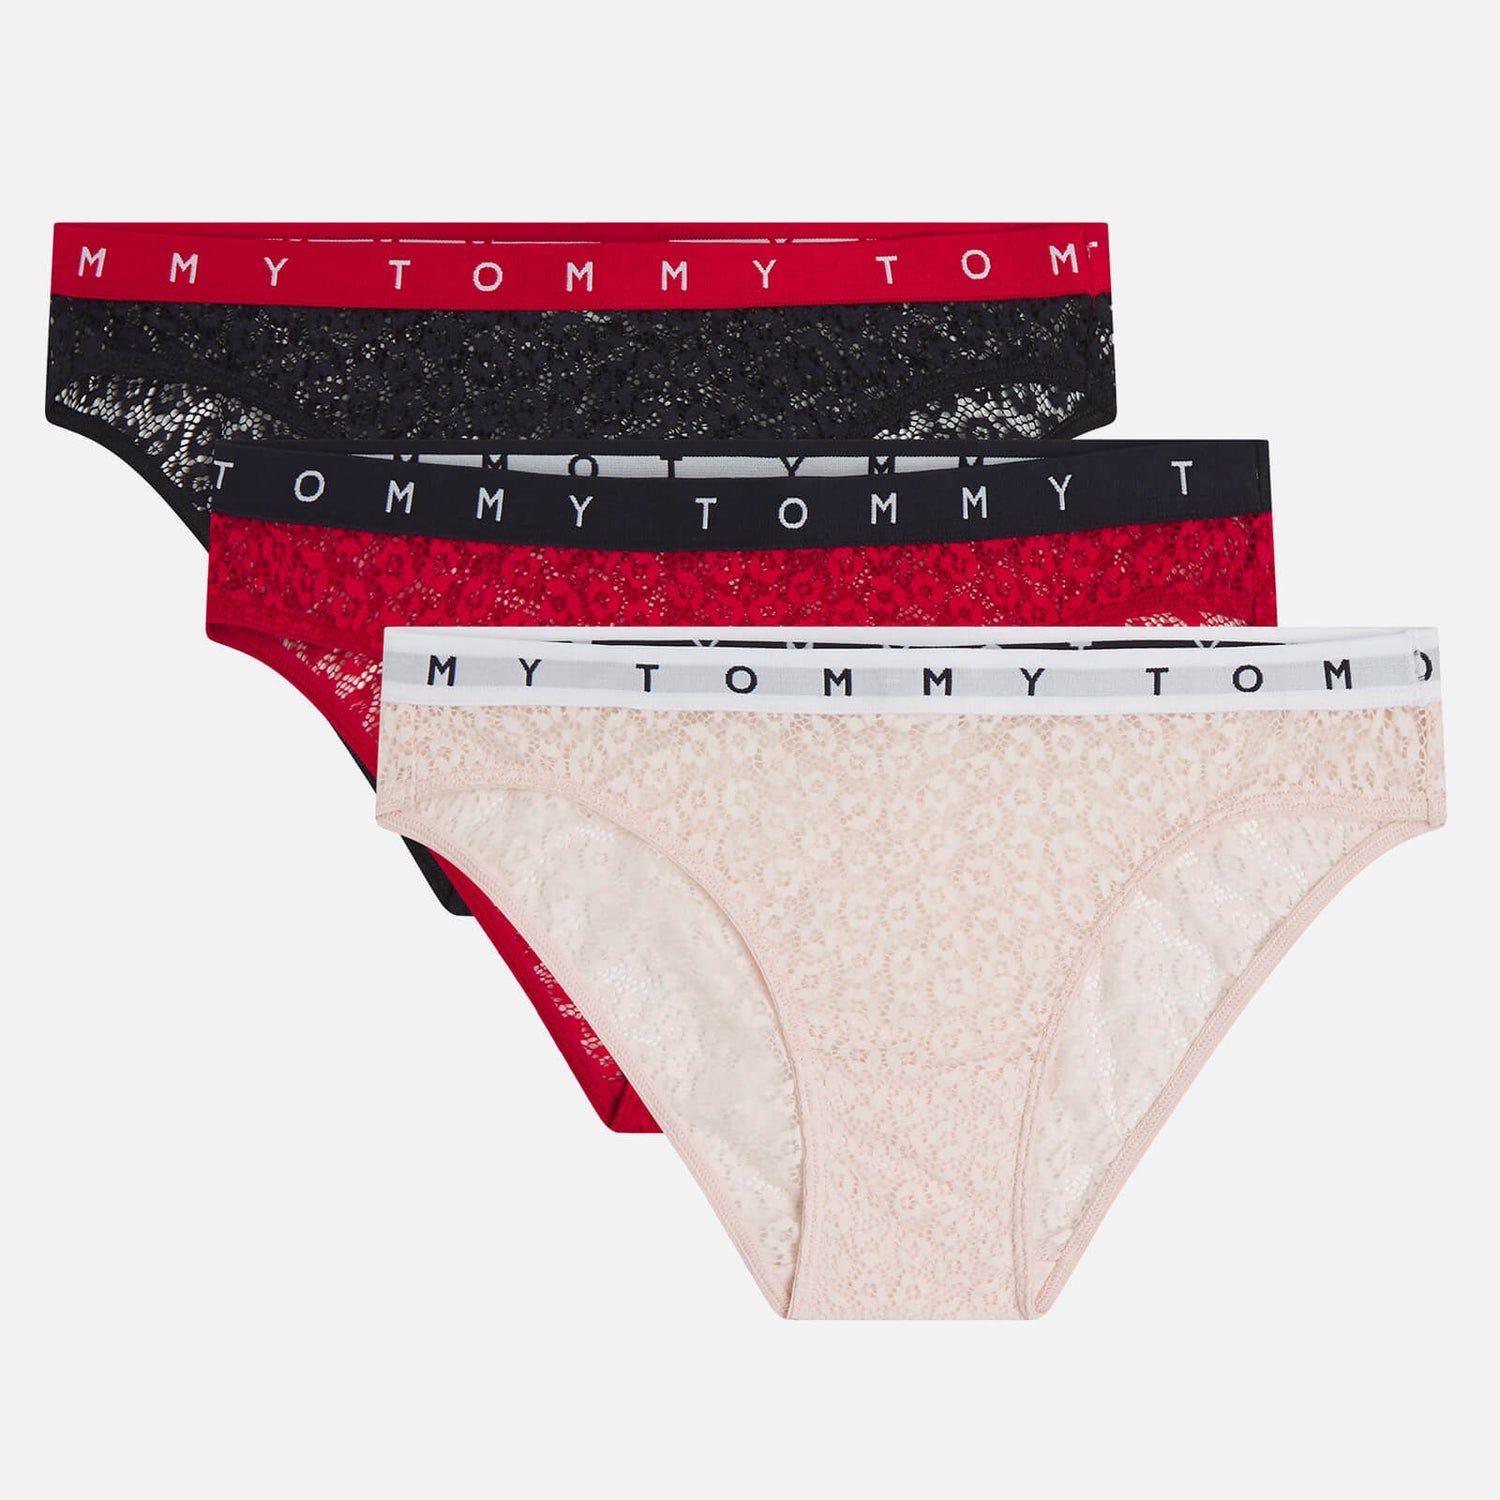 Tommy Hilfiger Women's 3-Pk Bikini - Desert Sky/Primary Red/Pale Pink